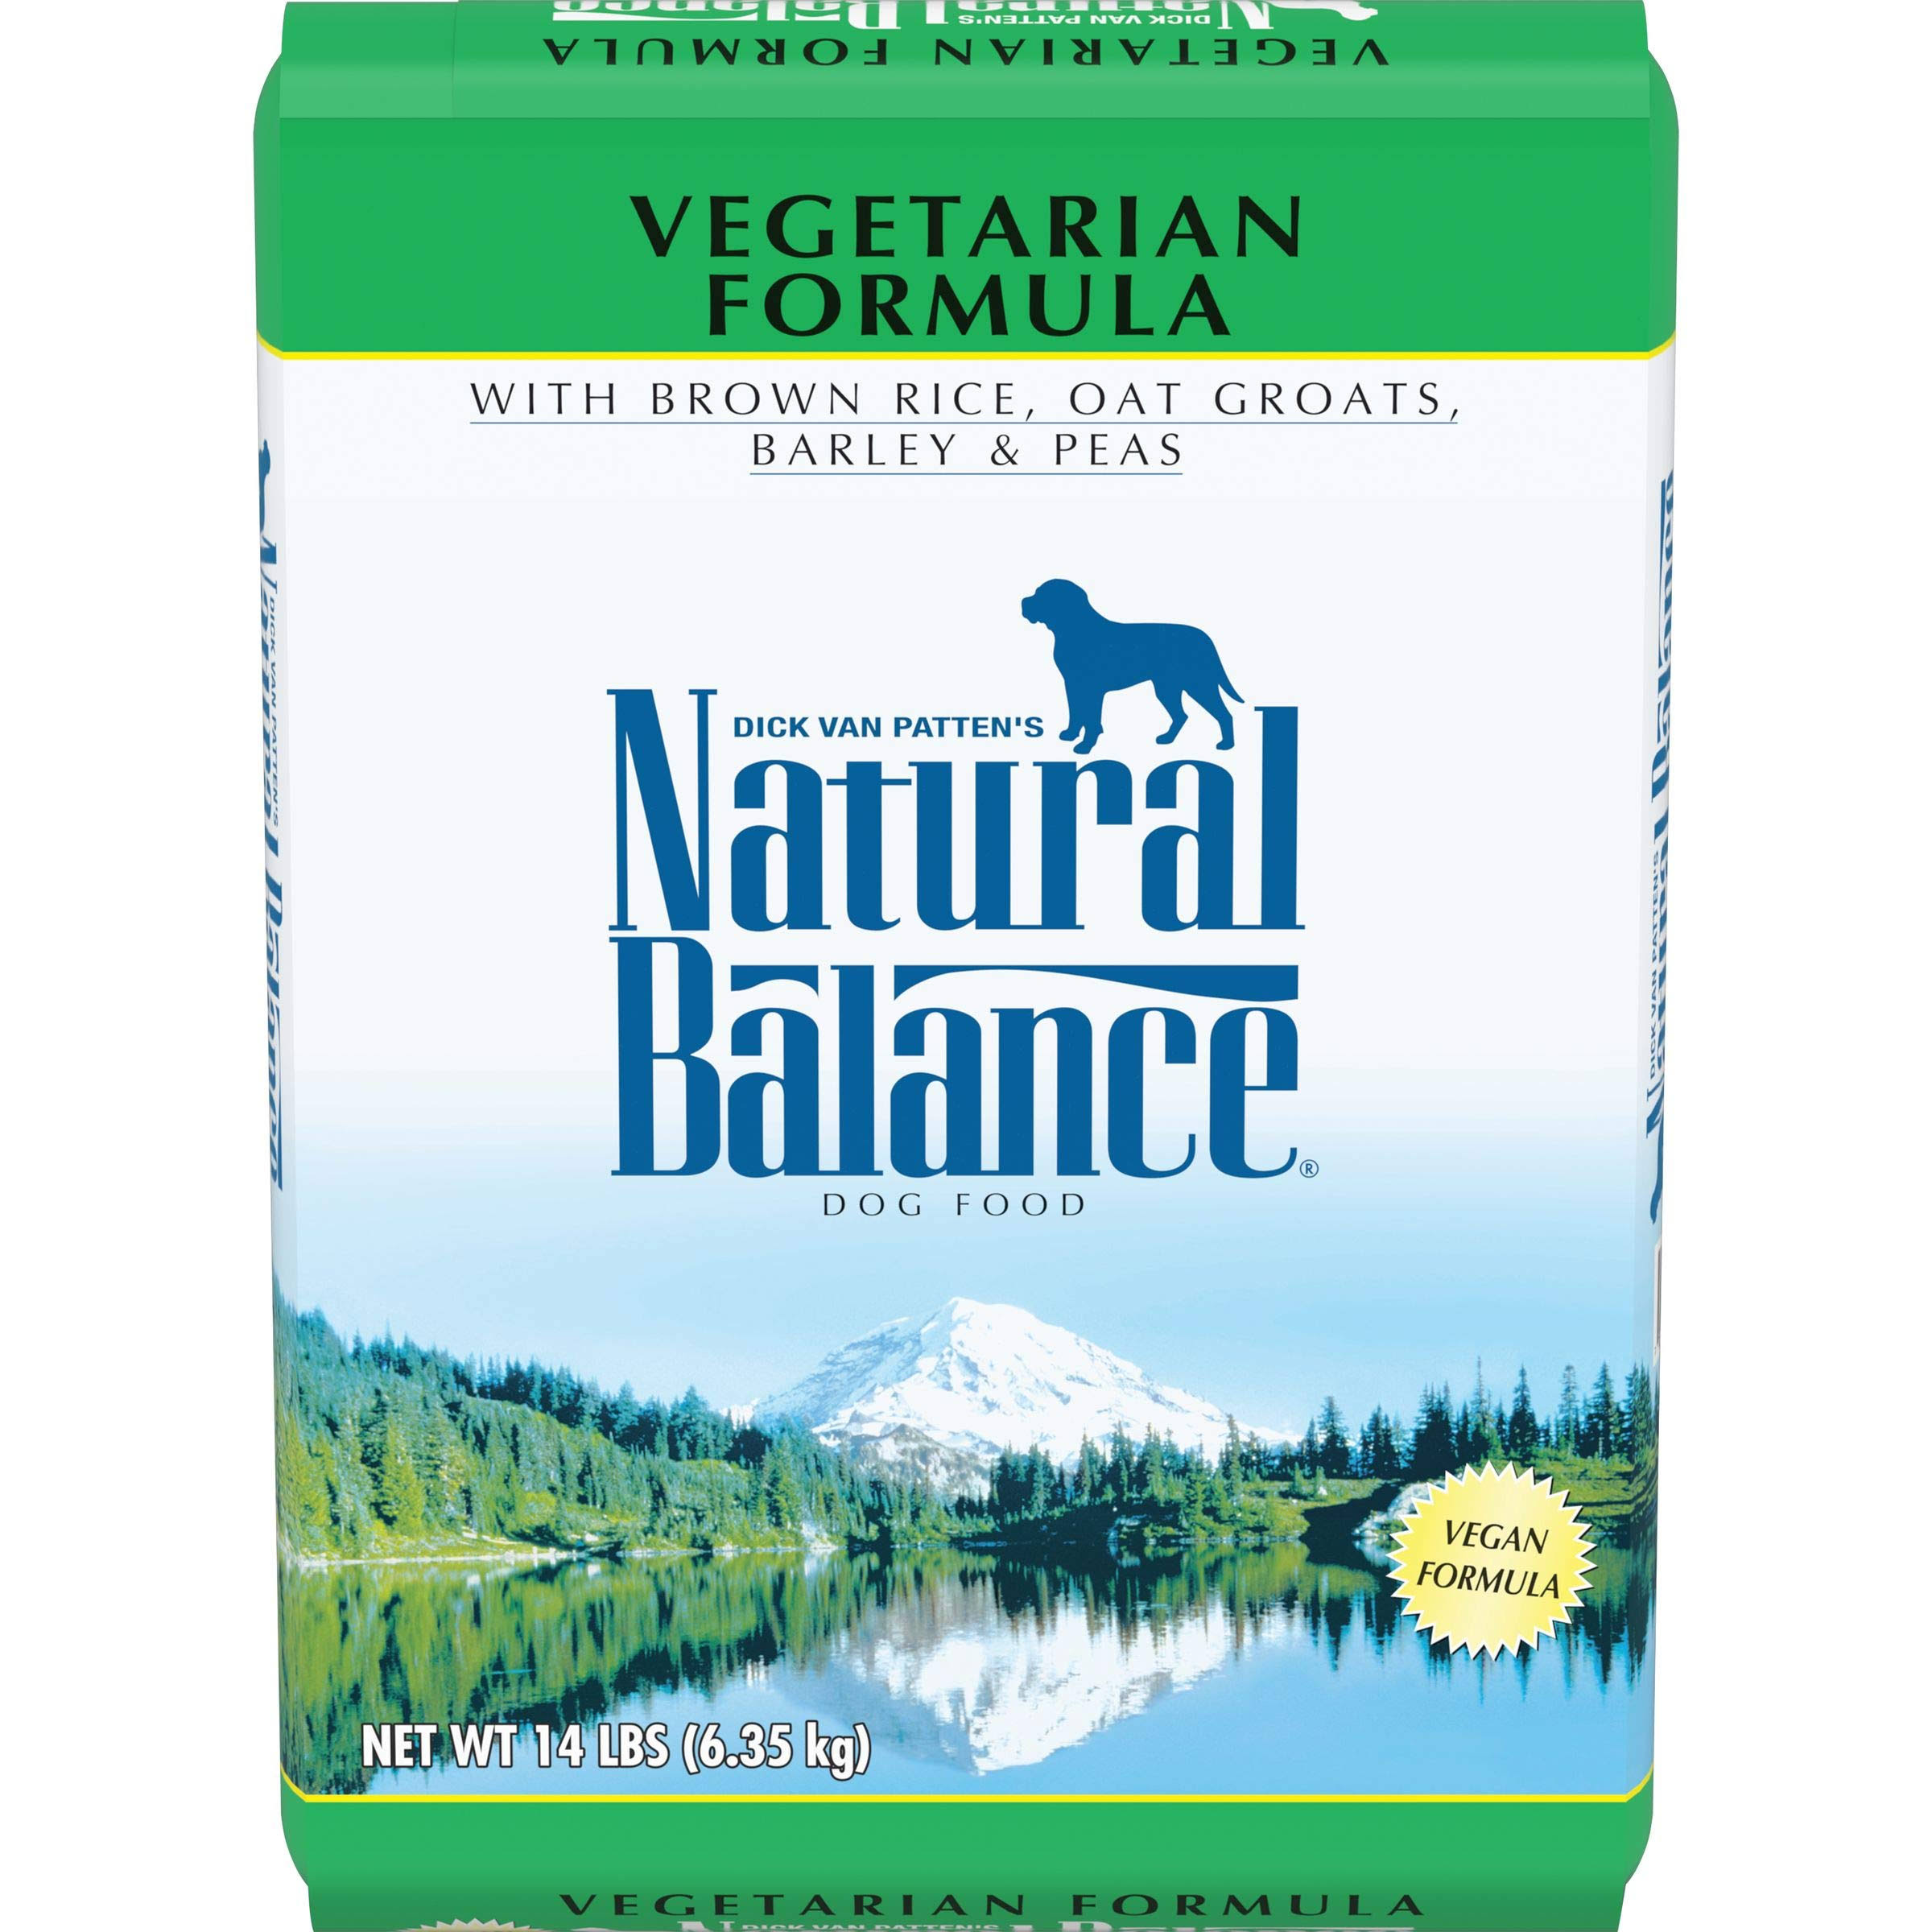 Natural Balance Dog Food - Vegetarian Formula